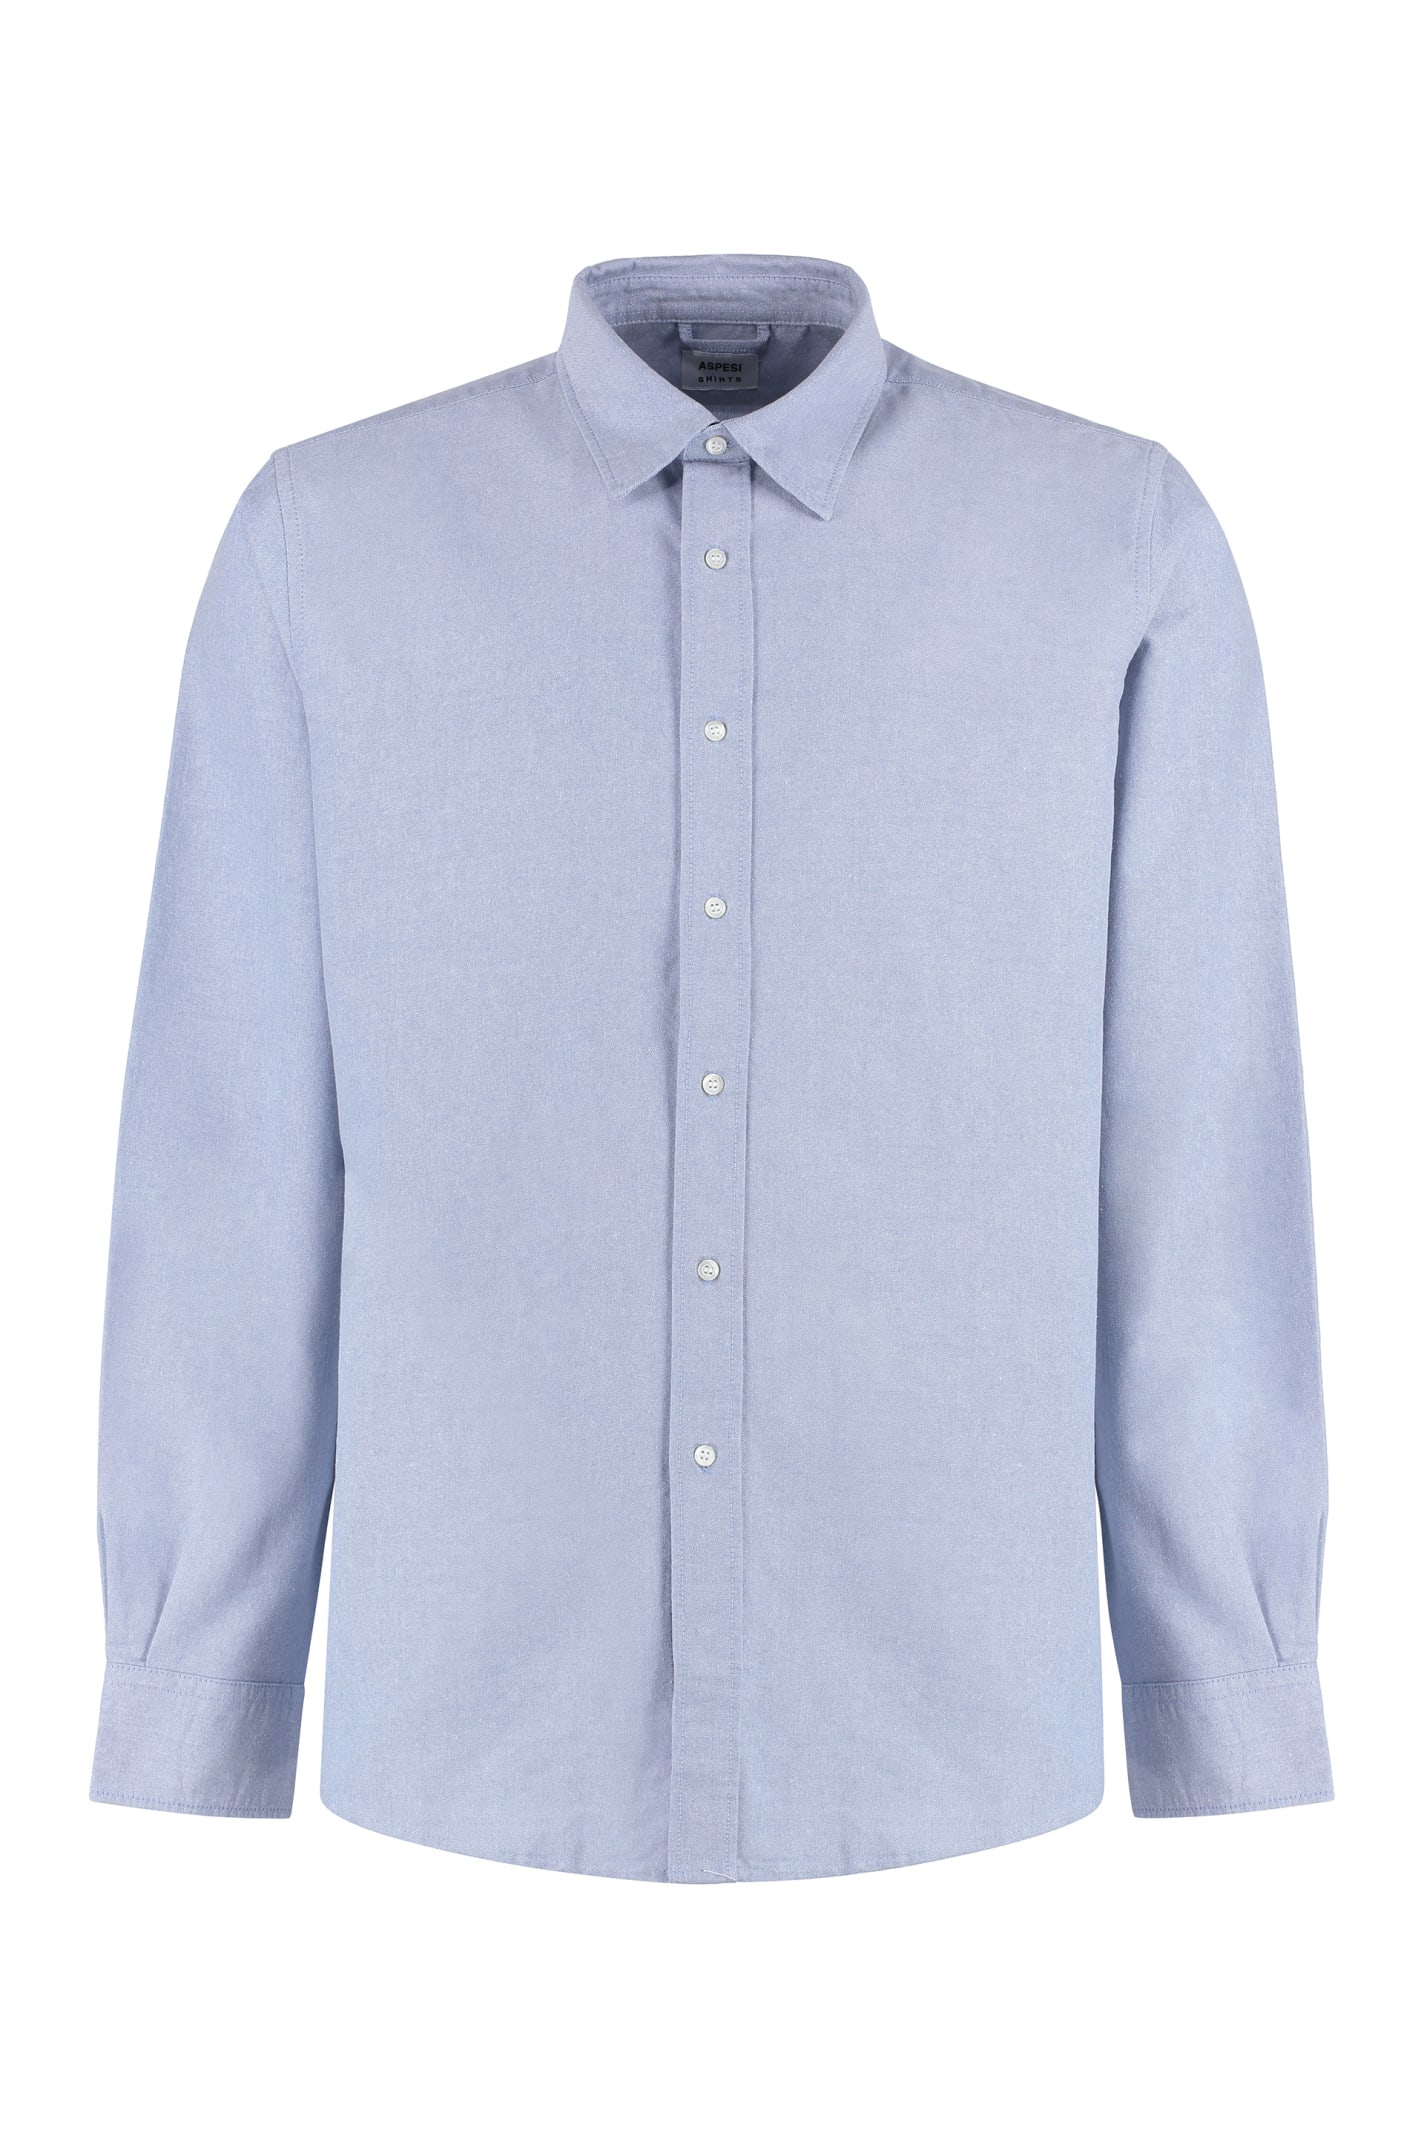 Aspesi Sterling Oxford Cotton Shirt